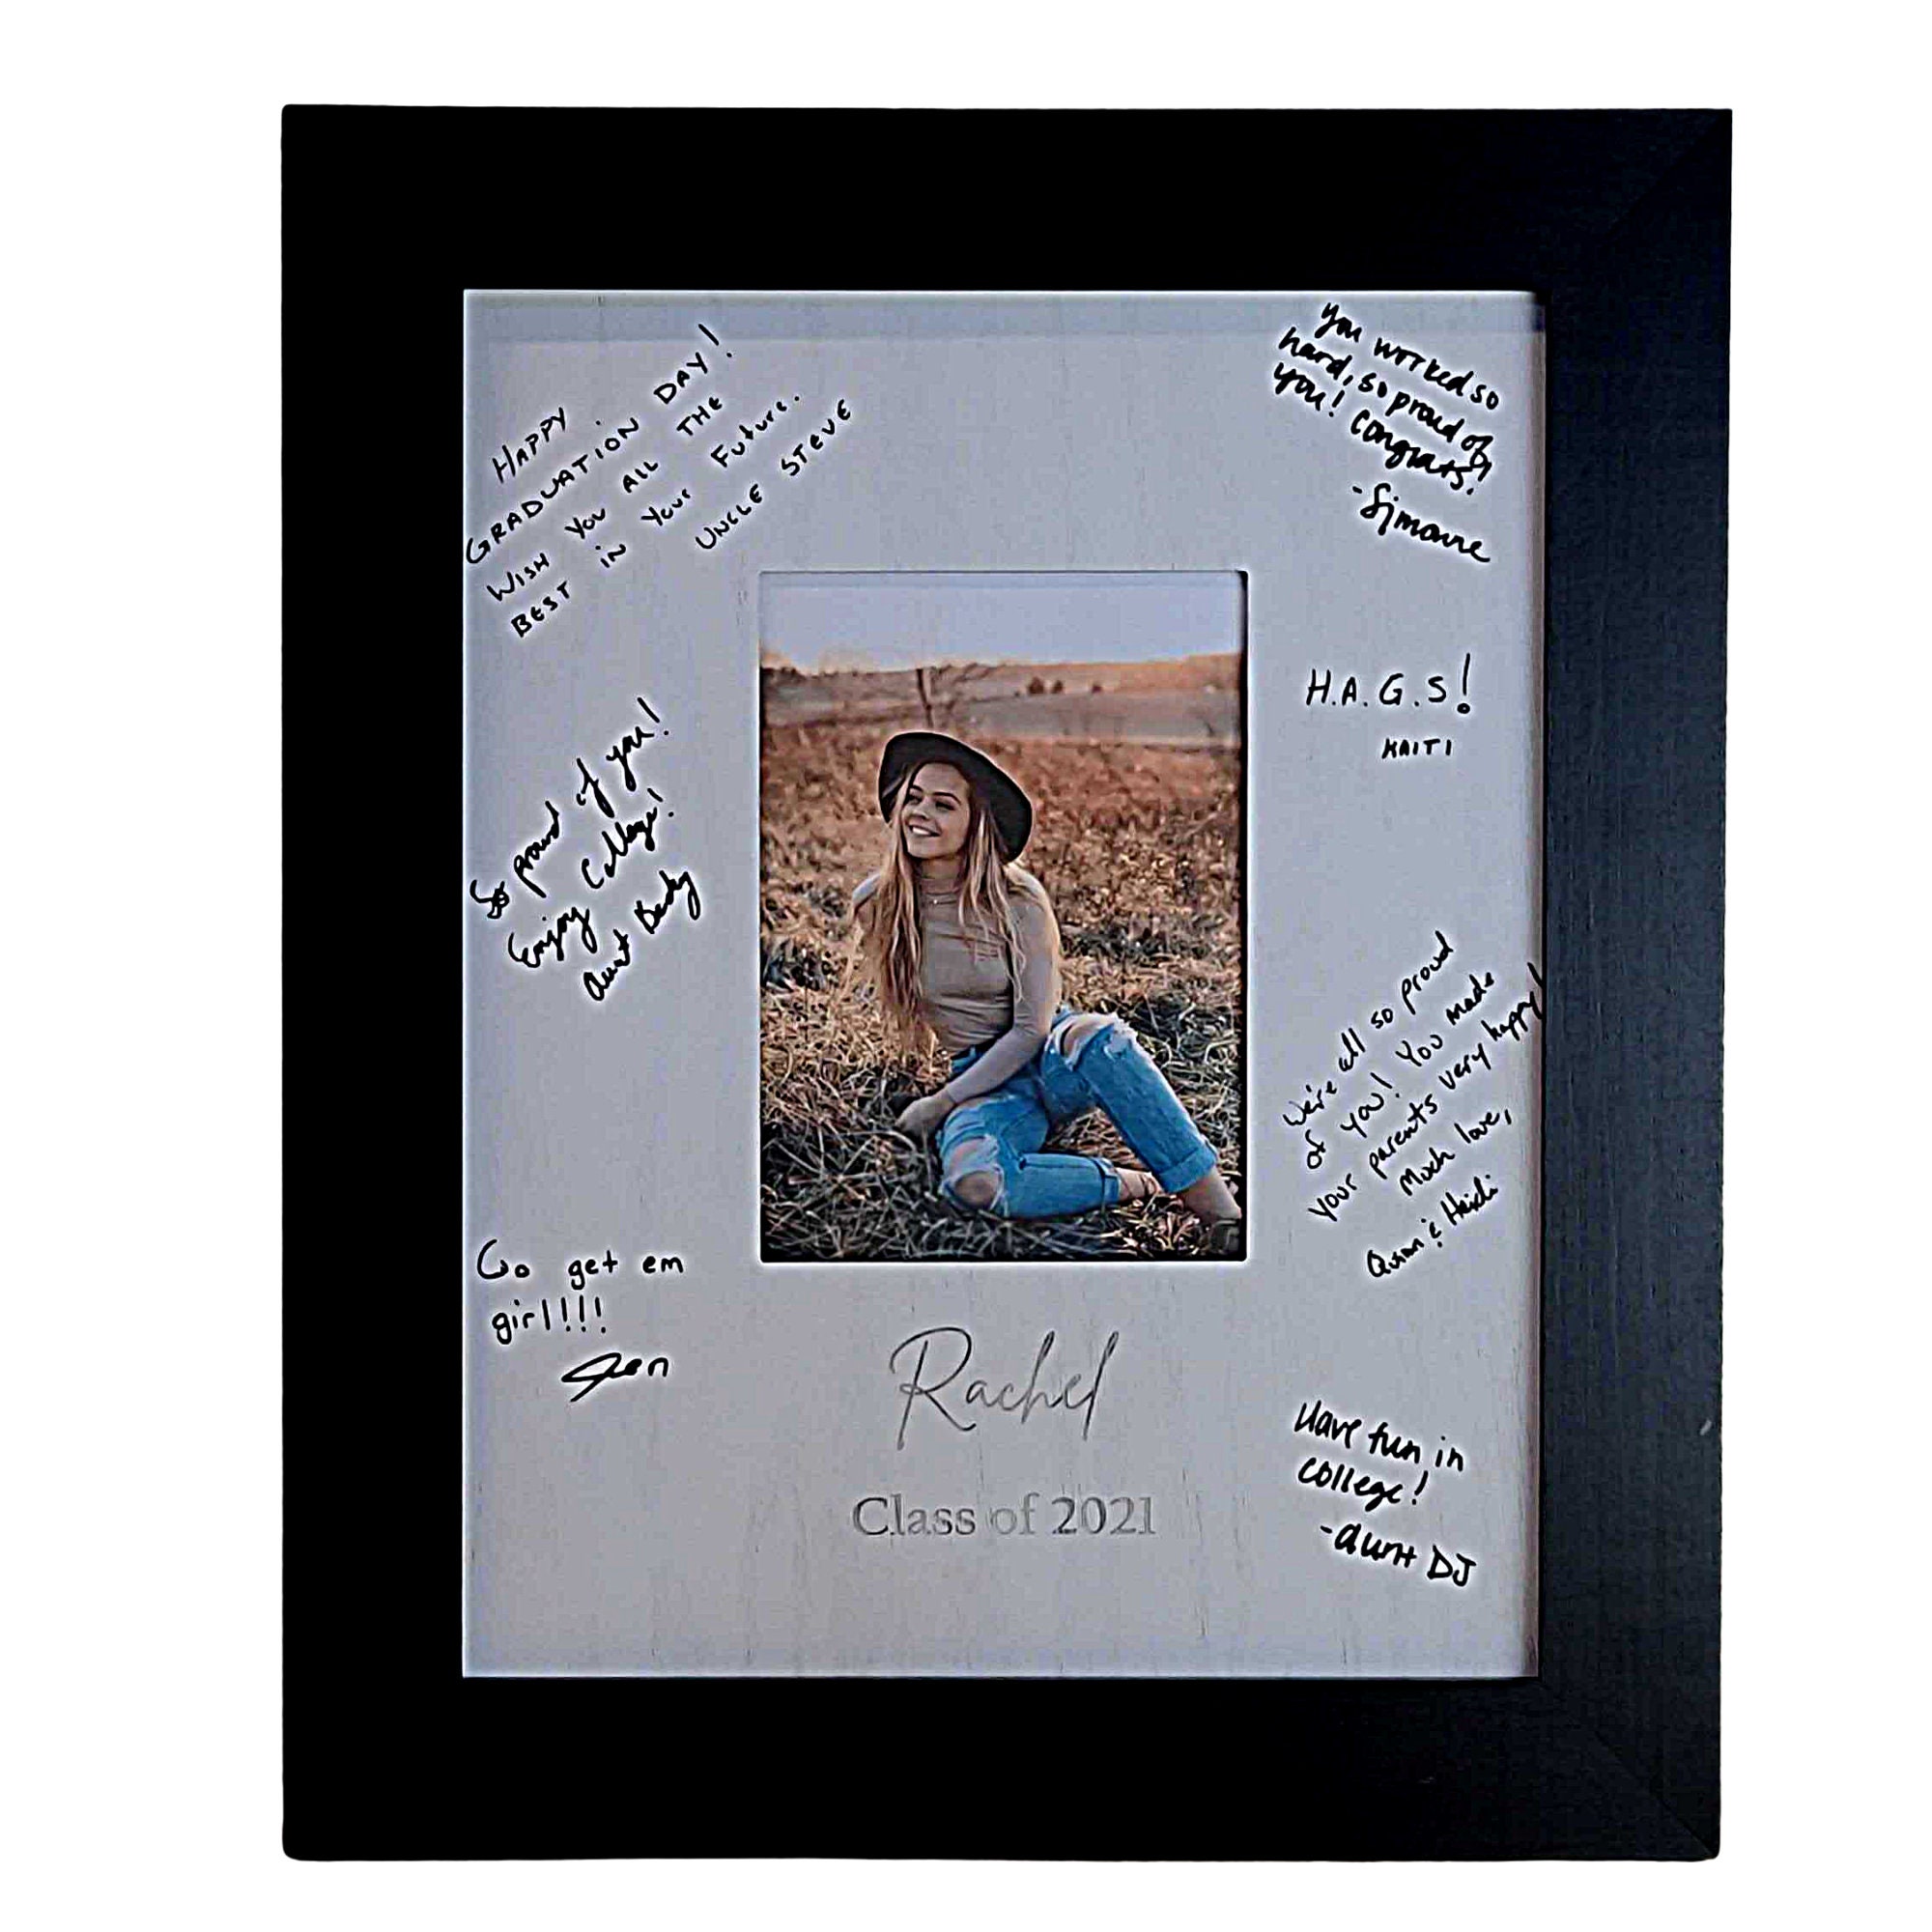 The Graduate 11x14 Personalized Signature Photo Frame